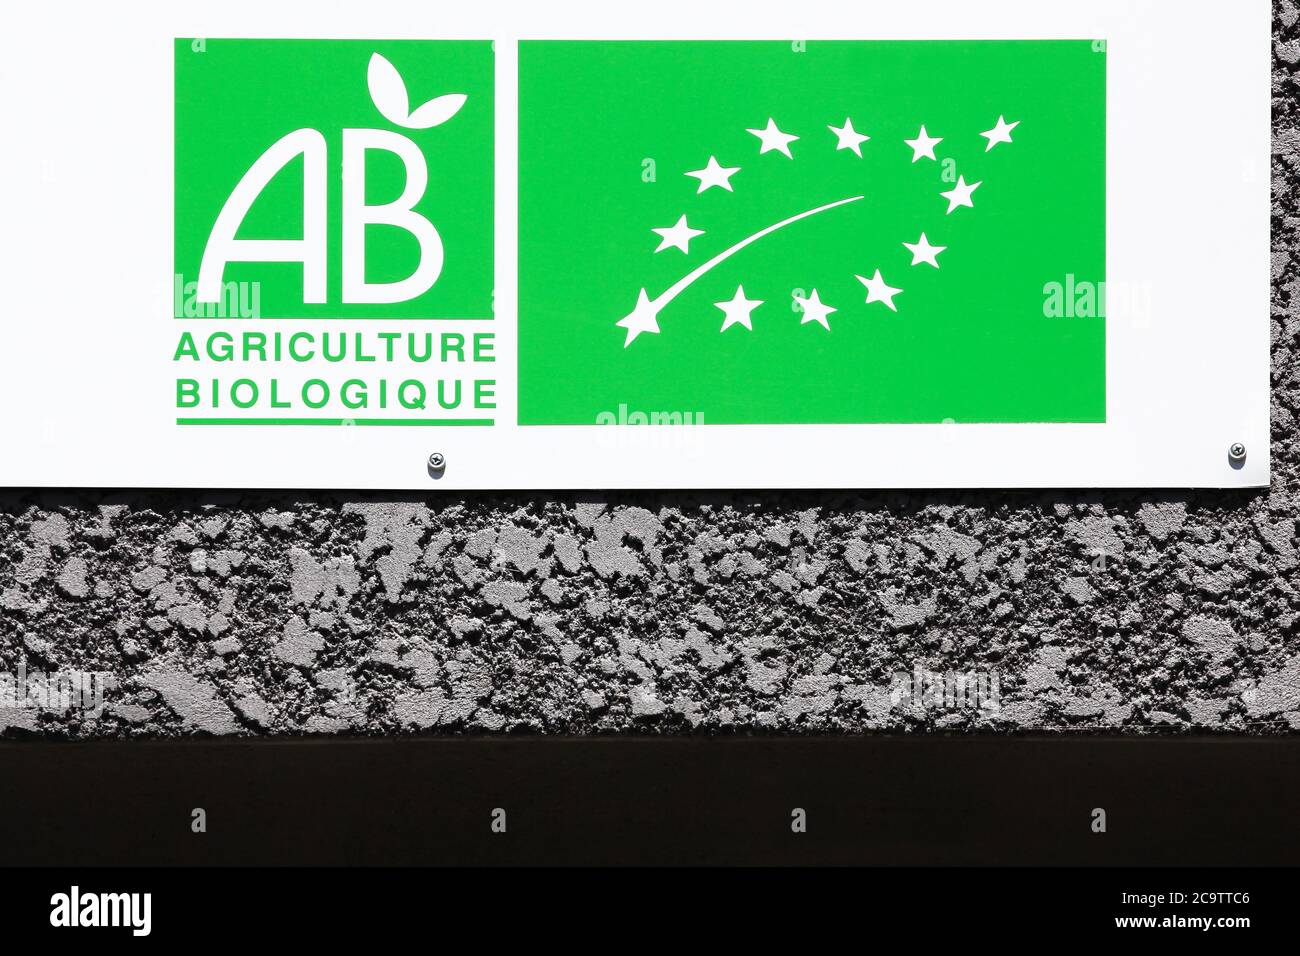 Anse, France - 4 juillet 2020 : label d'agriculture biologique appelé agriculture biologique en français, France Banque D'Images